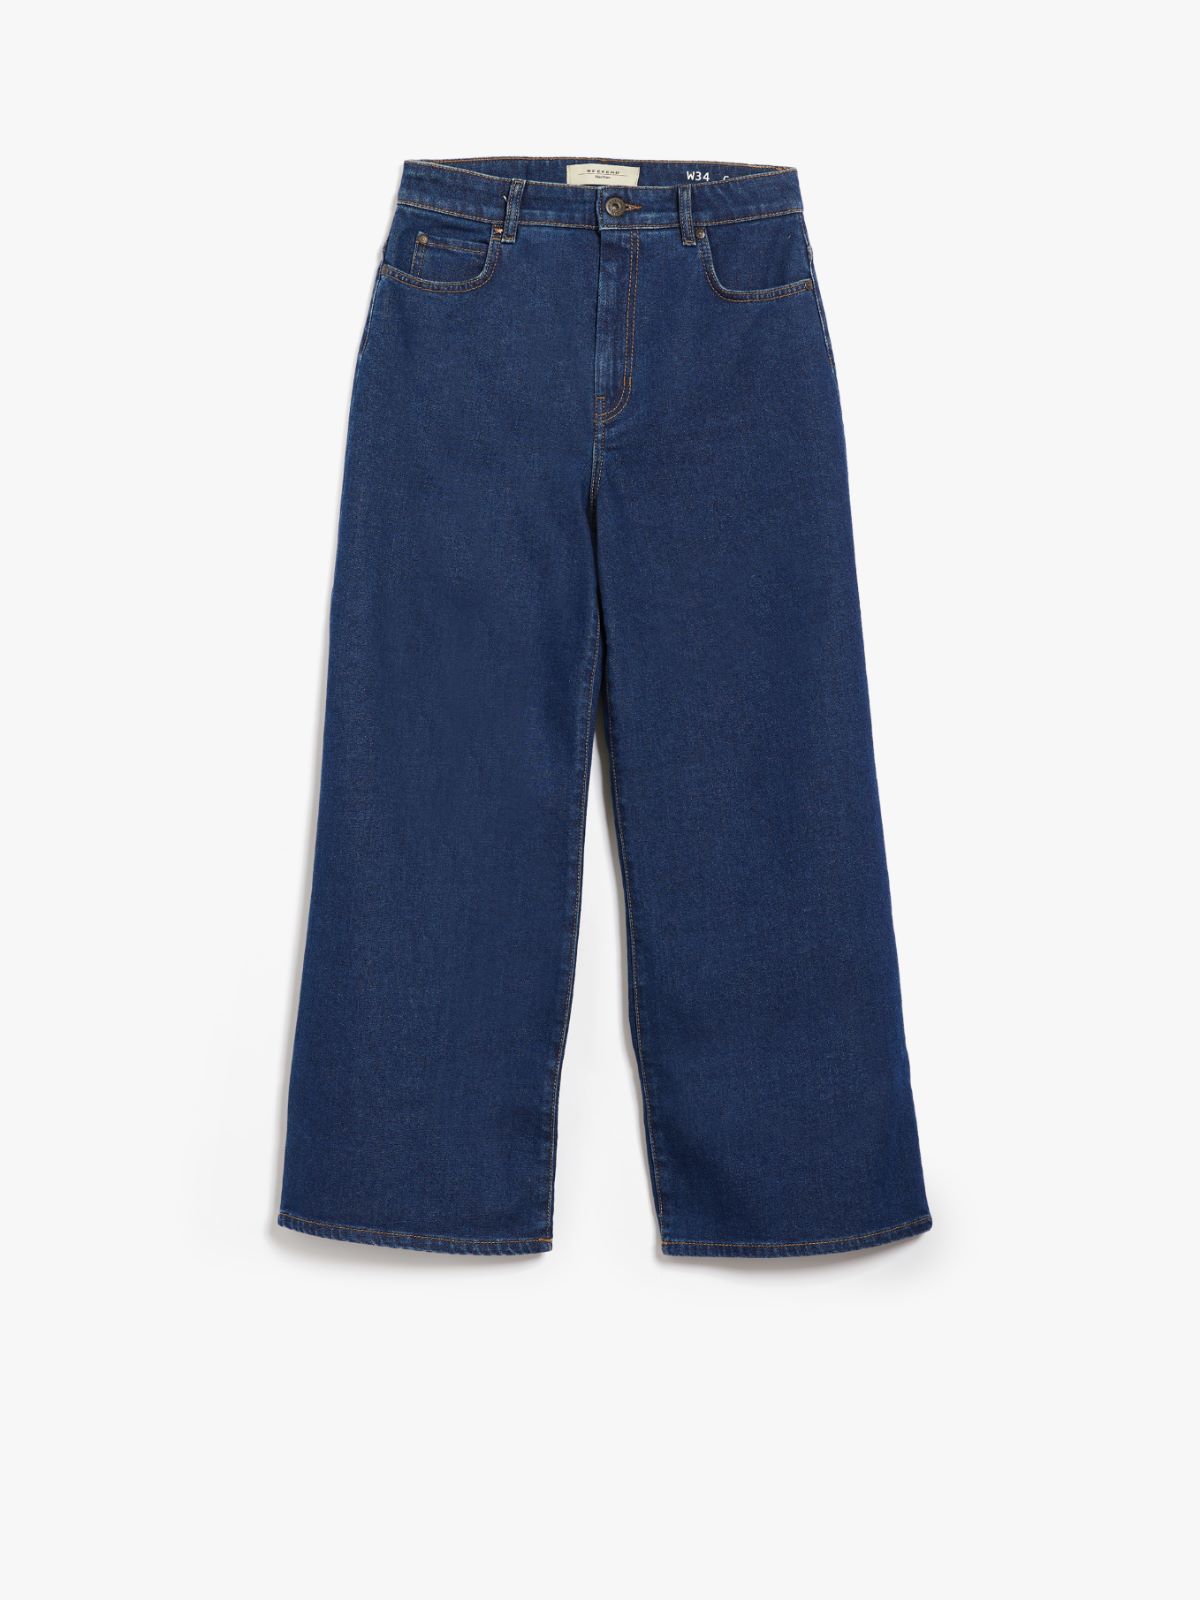 Jeans in organic cotton denim - NAVY - Weekend Max Mara - 6